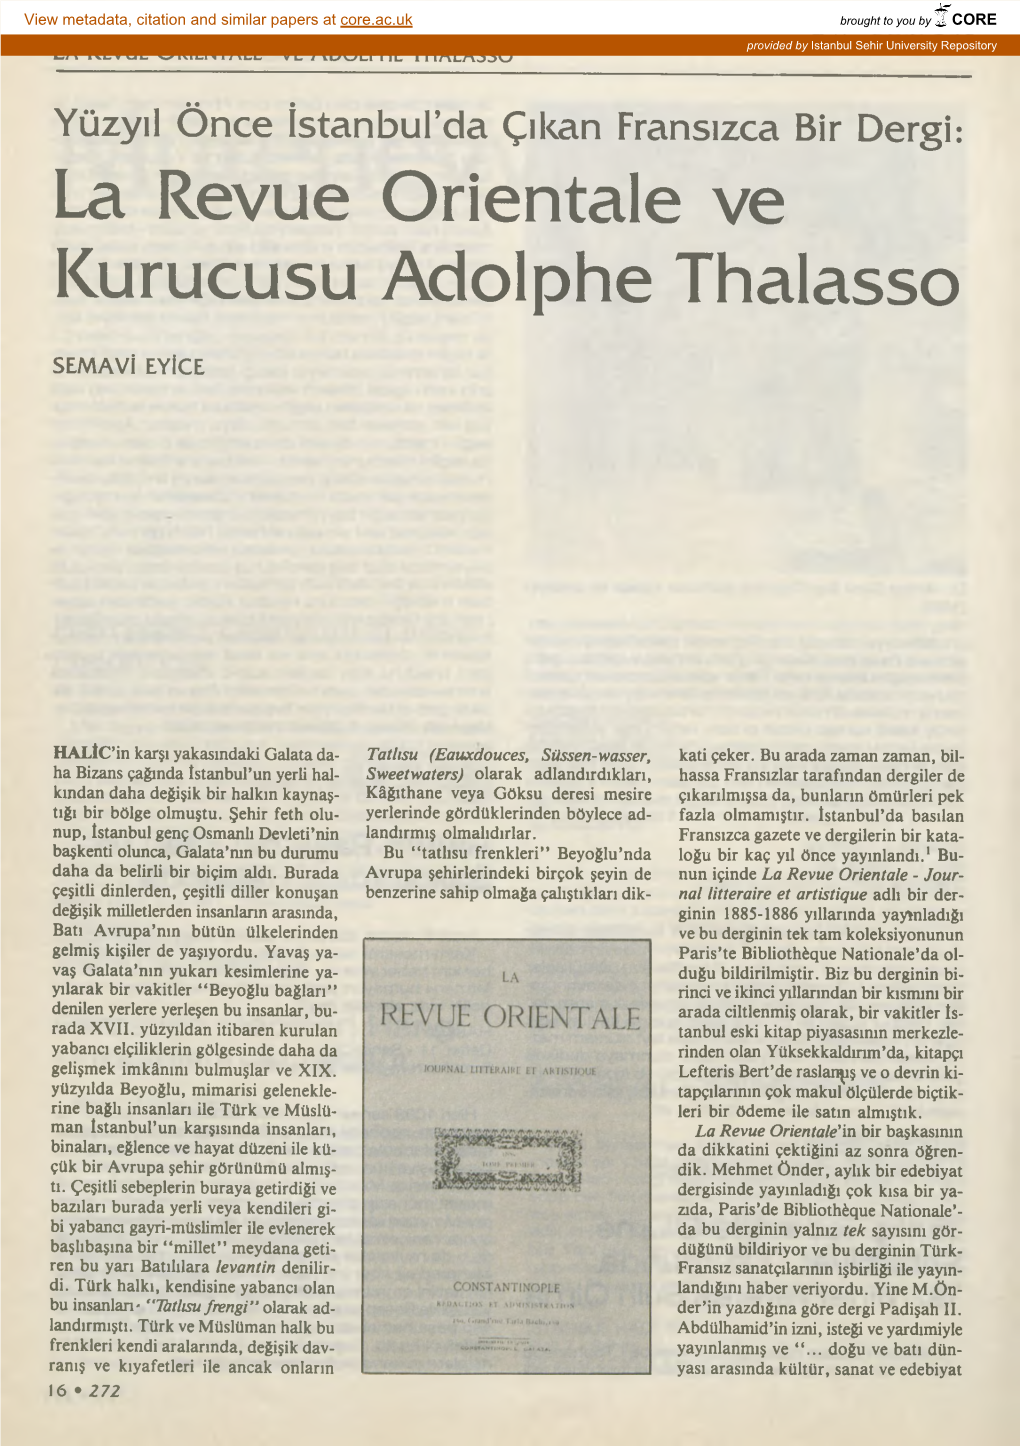 La Revue Orientale Ve Kurucusu Adolphe Thalasso